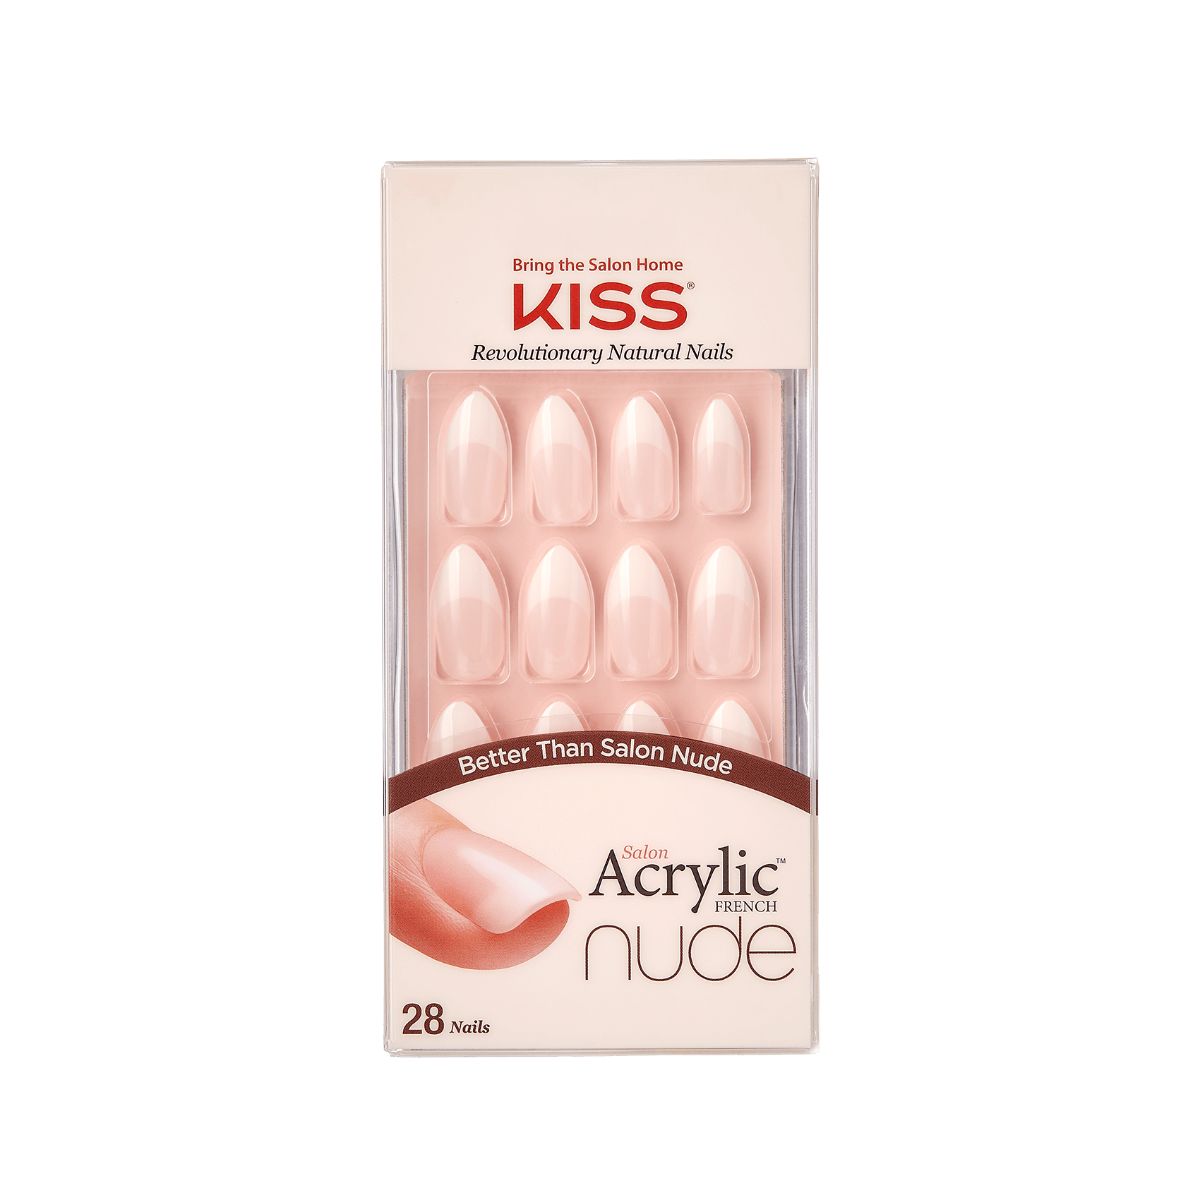 KISS Salon Acrylic French Nude Nails - Peaceful | KISS, imPRESS, JOAH